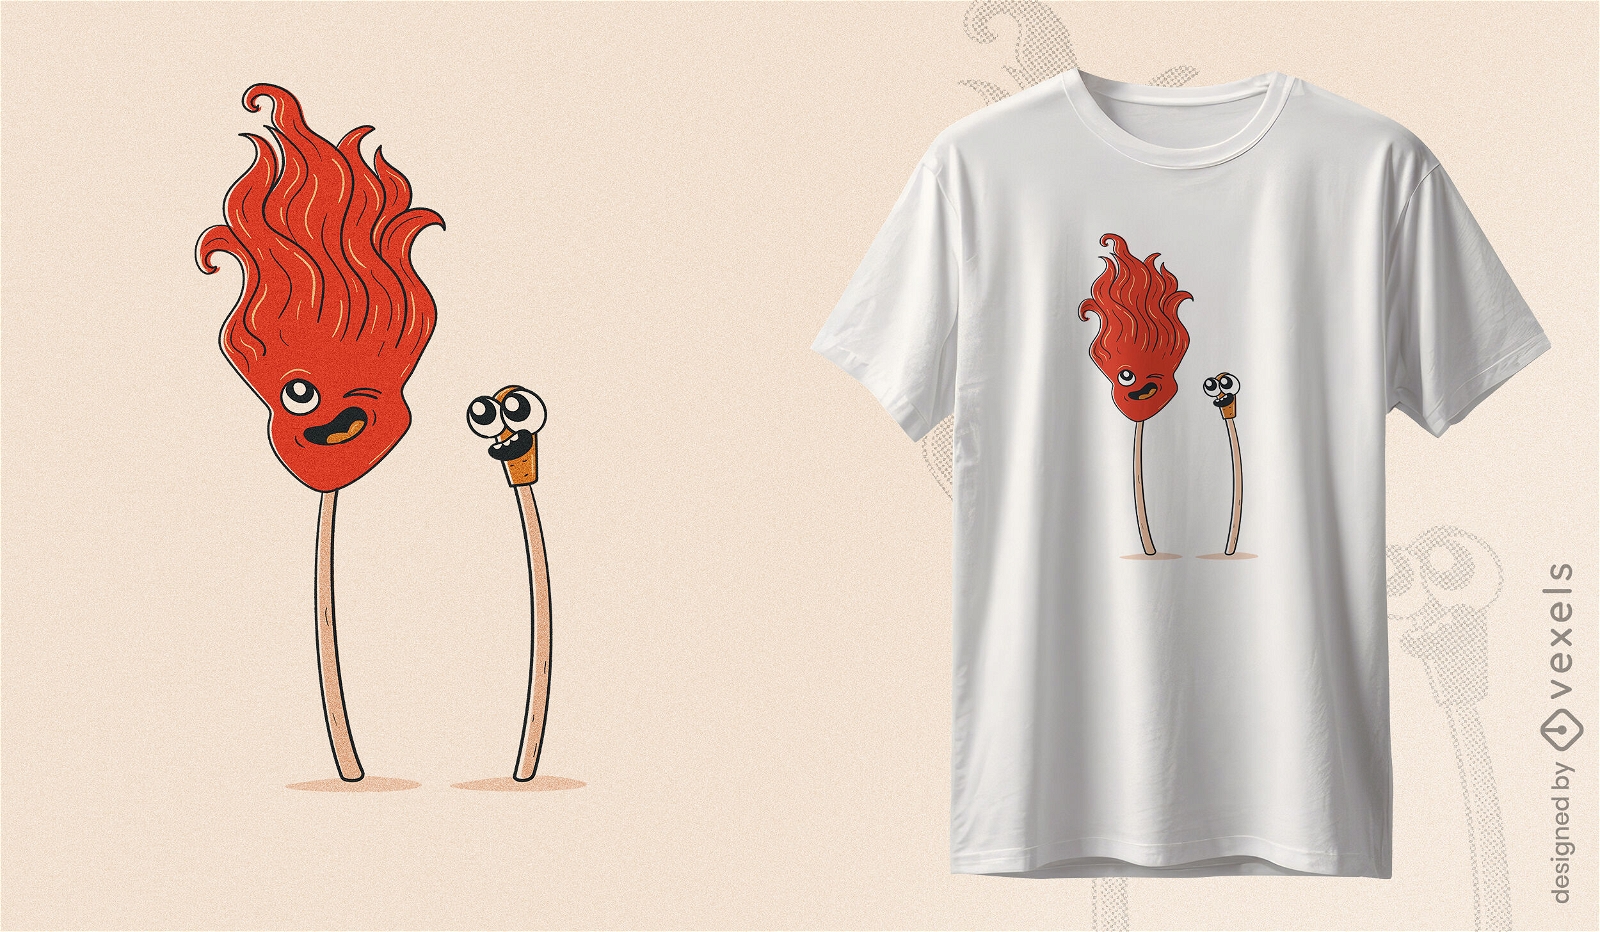 Matchstick-Pers?nlichkeits-T-Shirt-Design